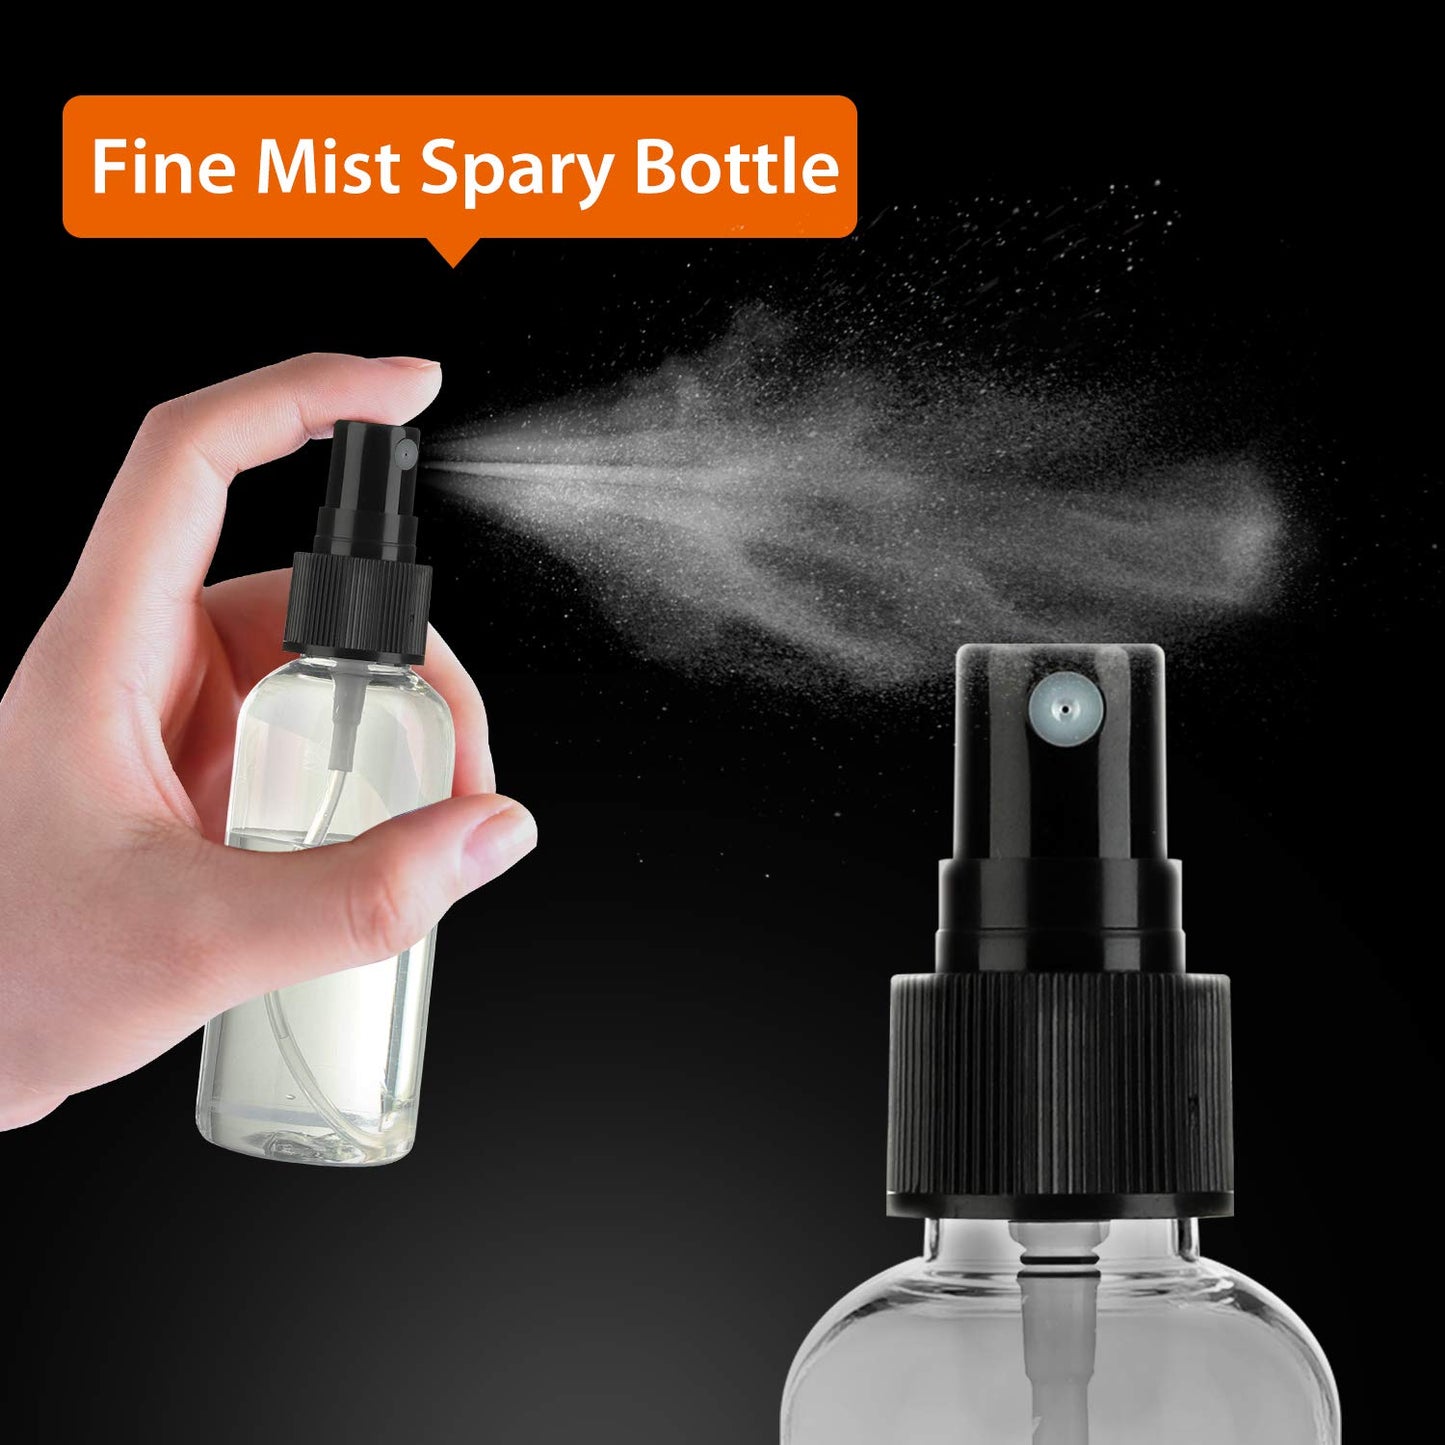 30 Pack 2 oz Fine Mist Mini Clear Spray Bottles with Pump Spray Cap - for Essential Oils, Travel, Perfumes - Refillable & Reusable Empty Plastic Bottles Travel Bottle